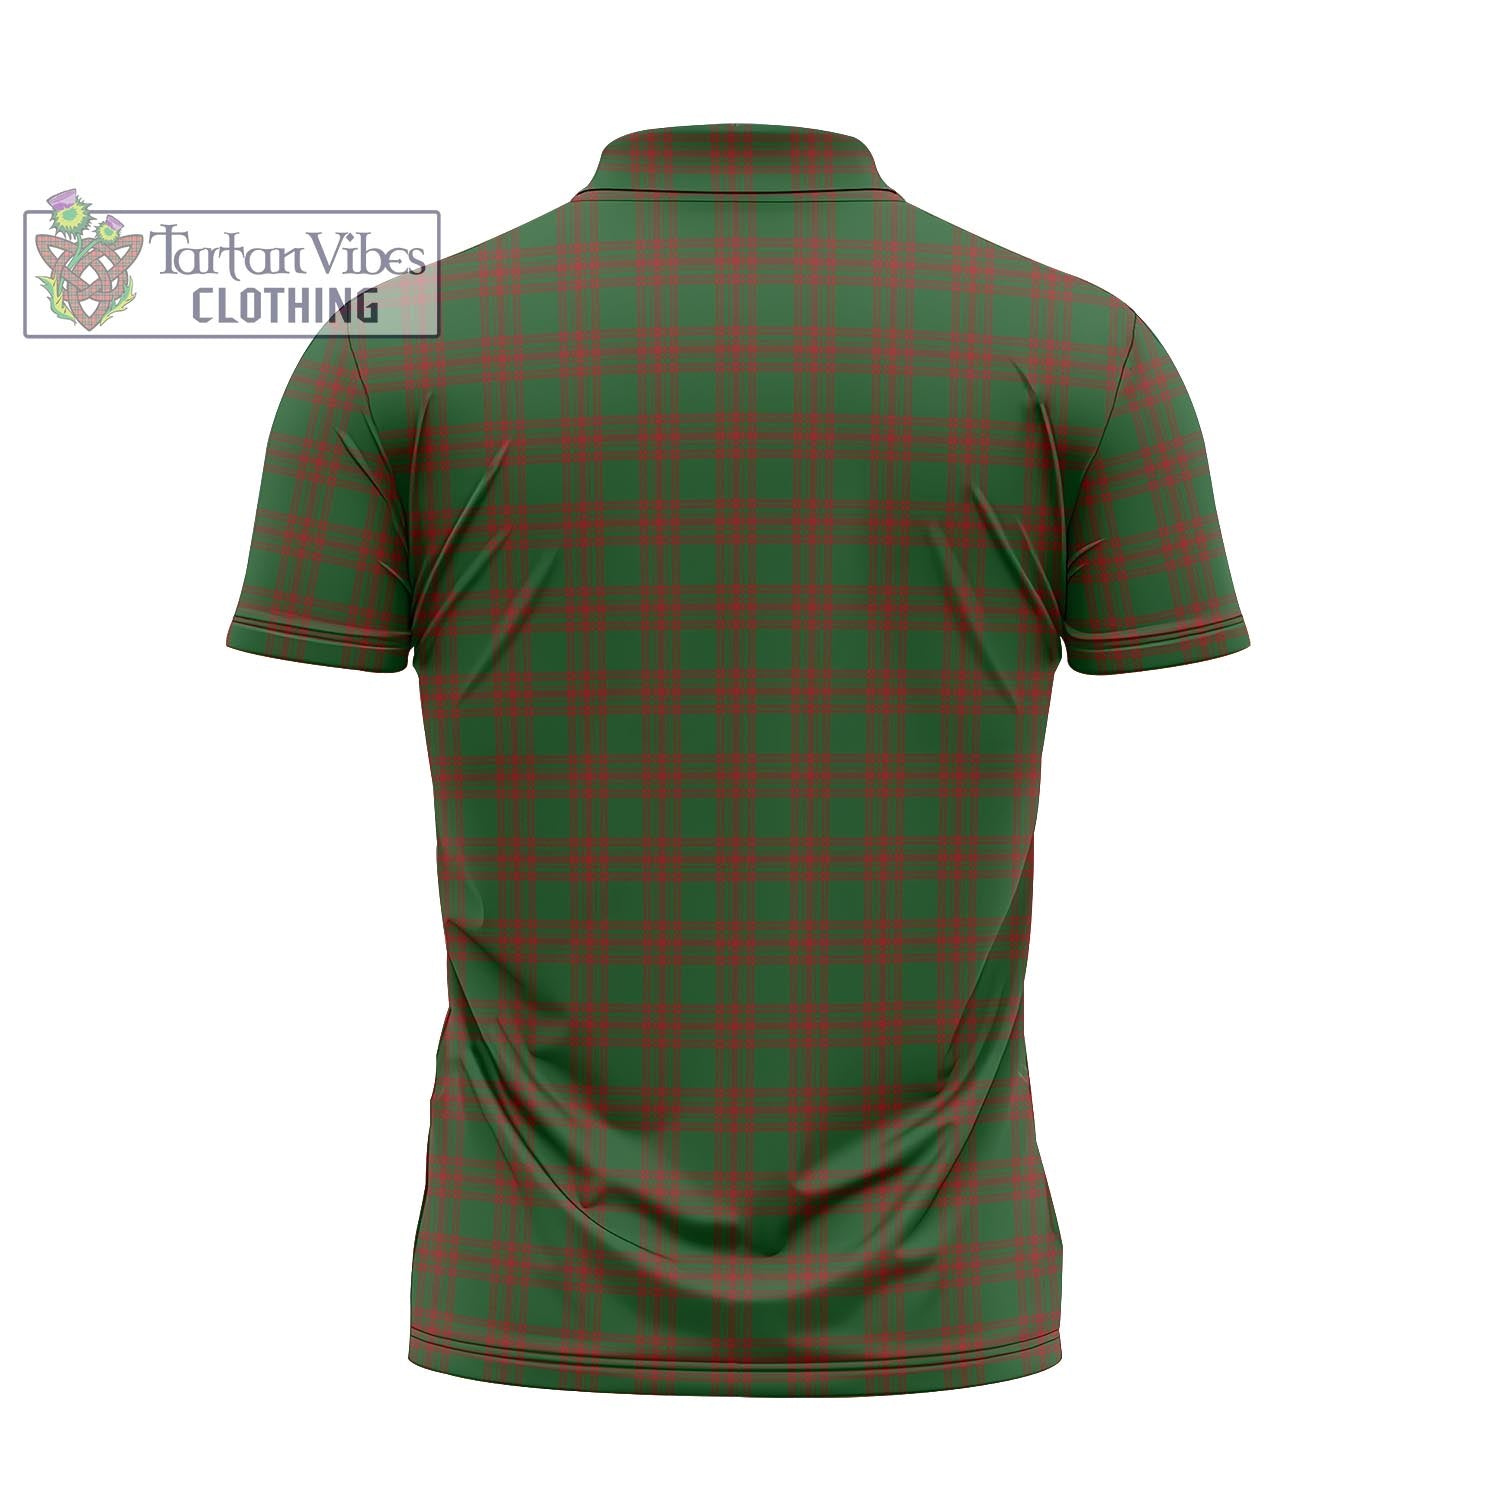 Tartan Vibes Clothing Menzies Tartan Zipper Polo Shirt with Family Crest